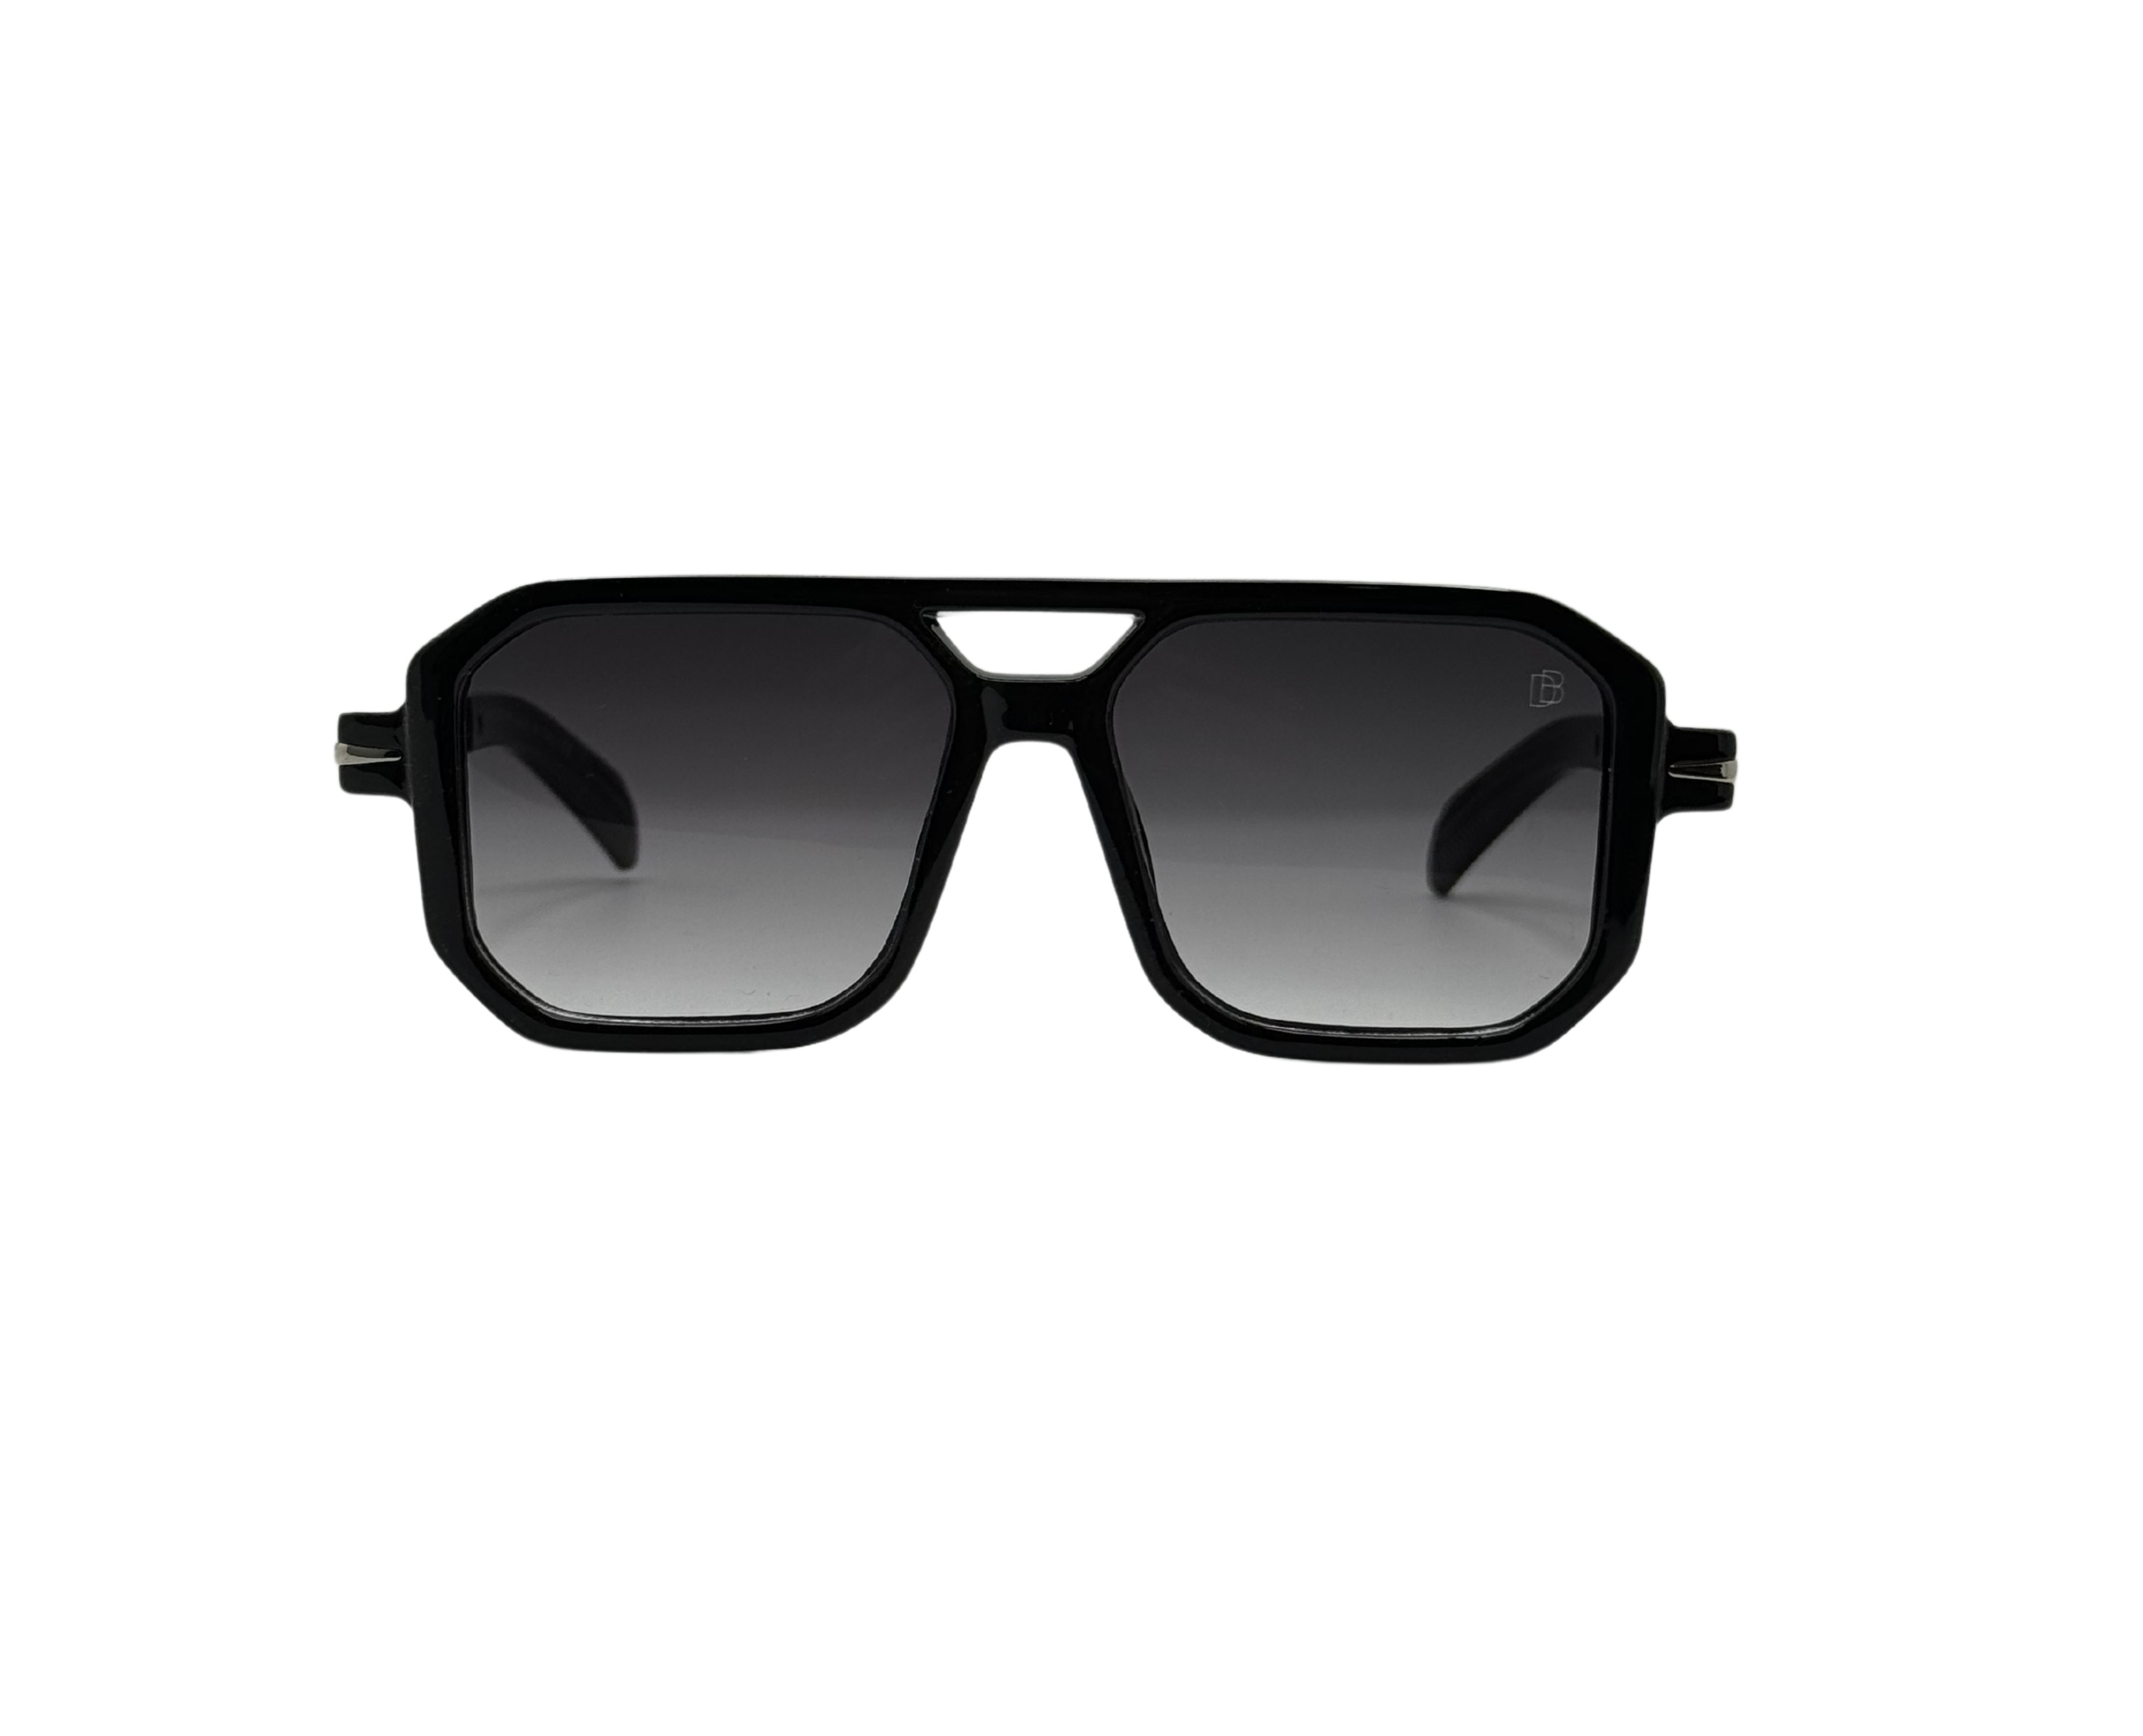 Top-Rod Sunglasses